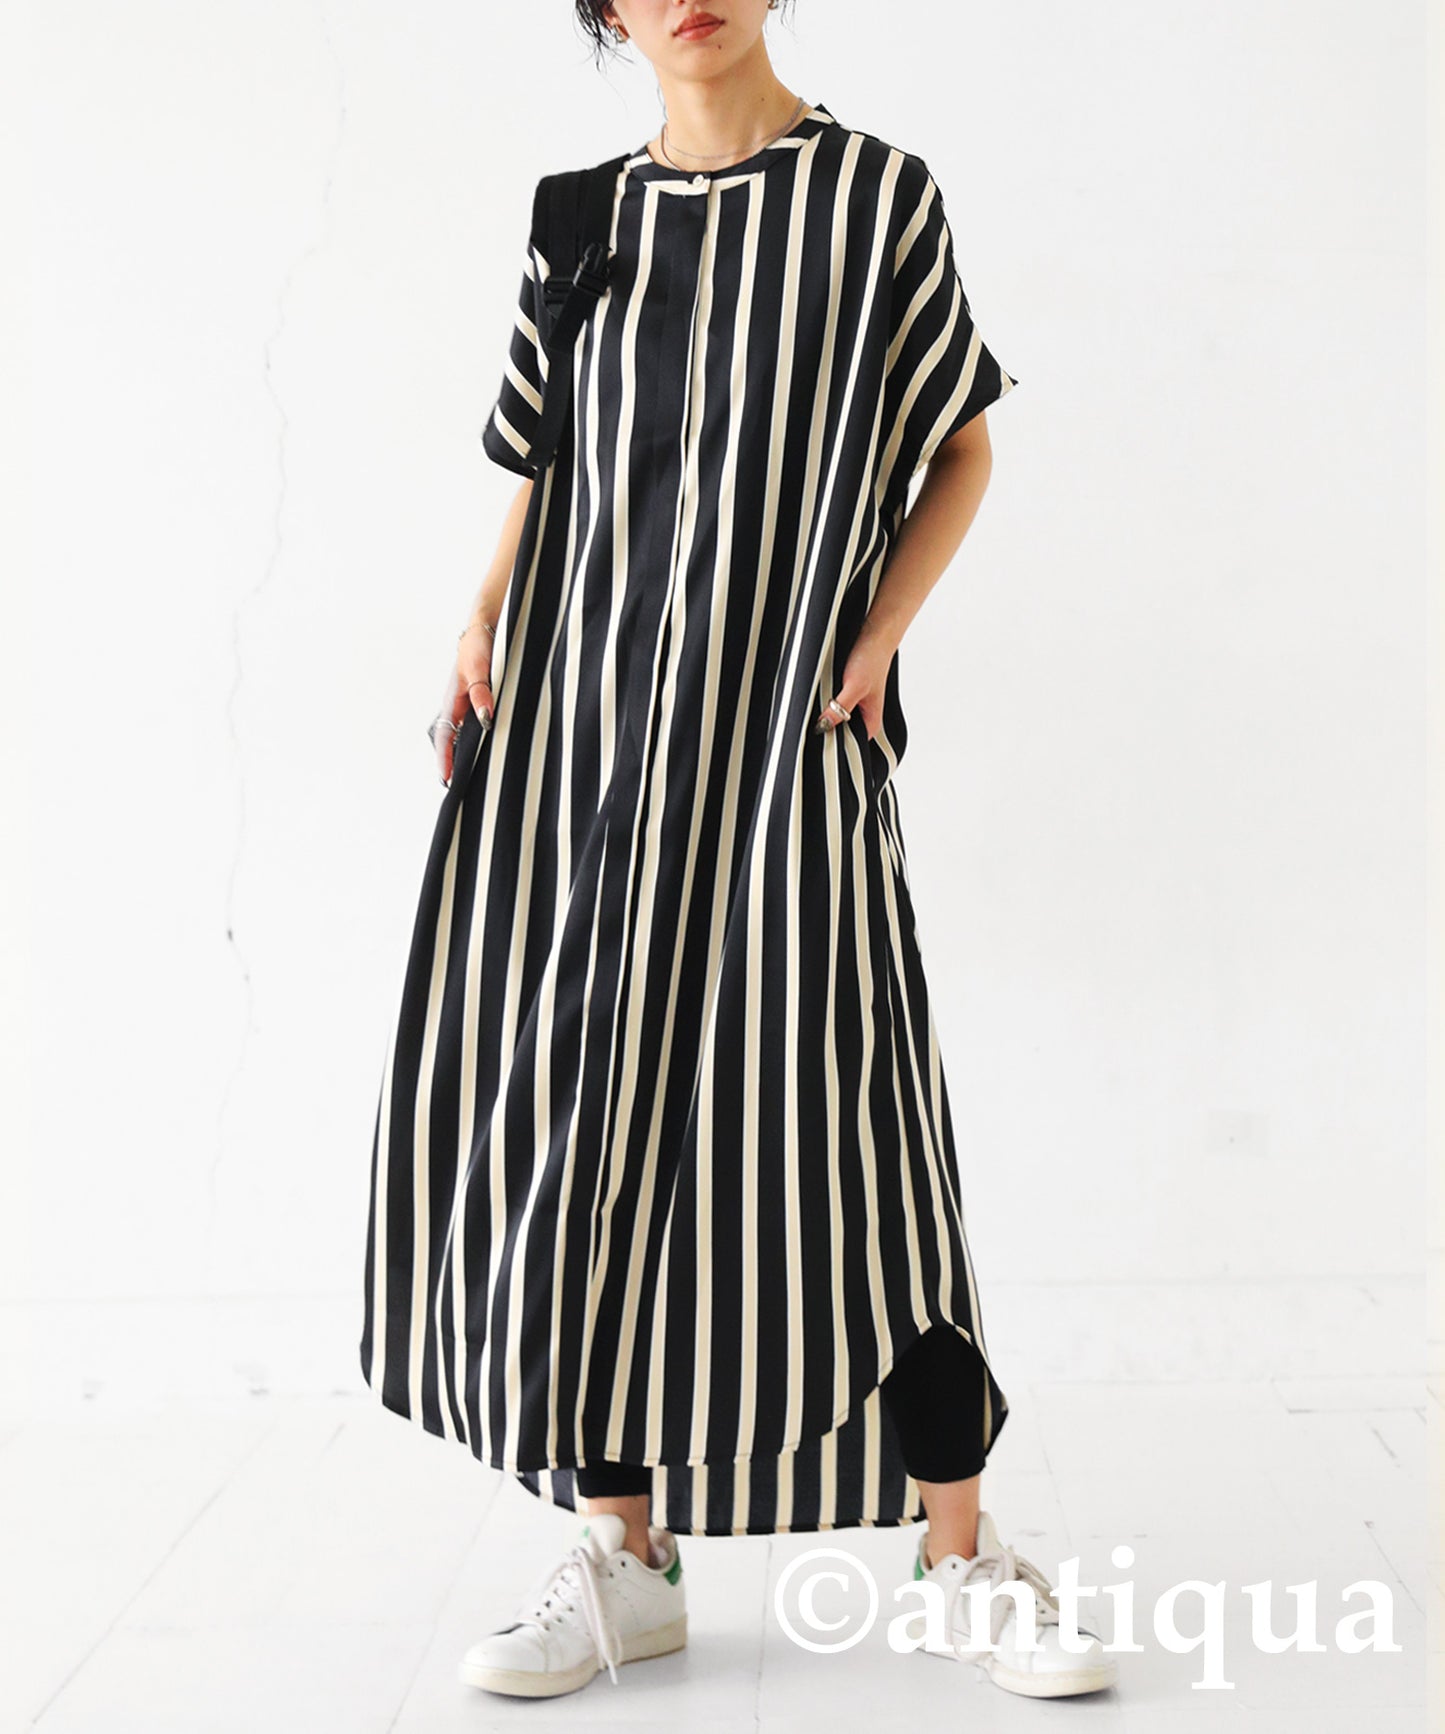 Striped Pattern Dress Ladies